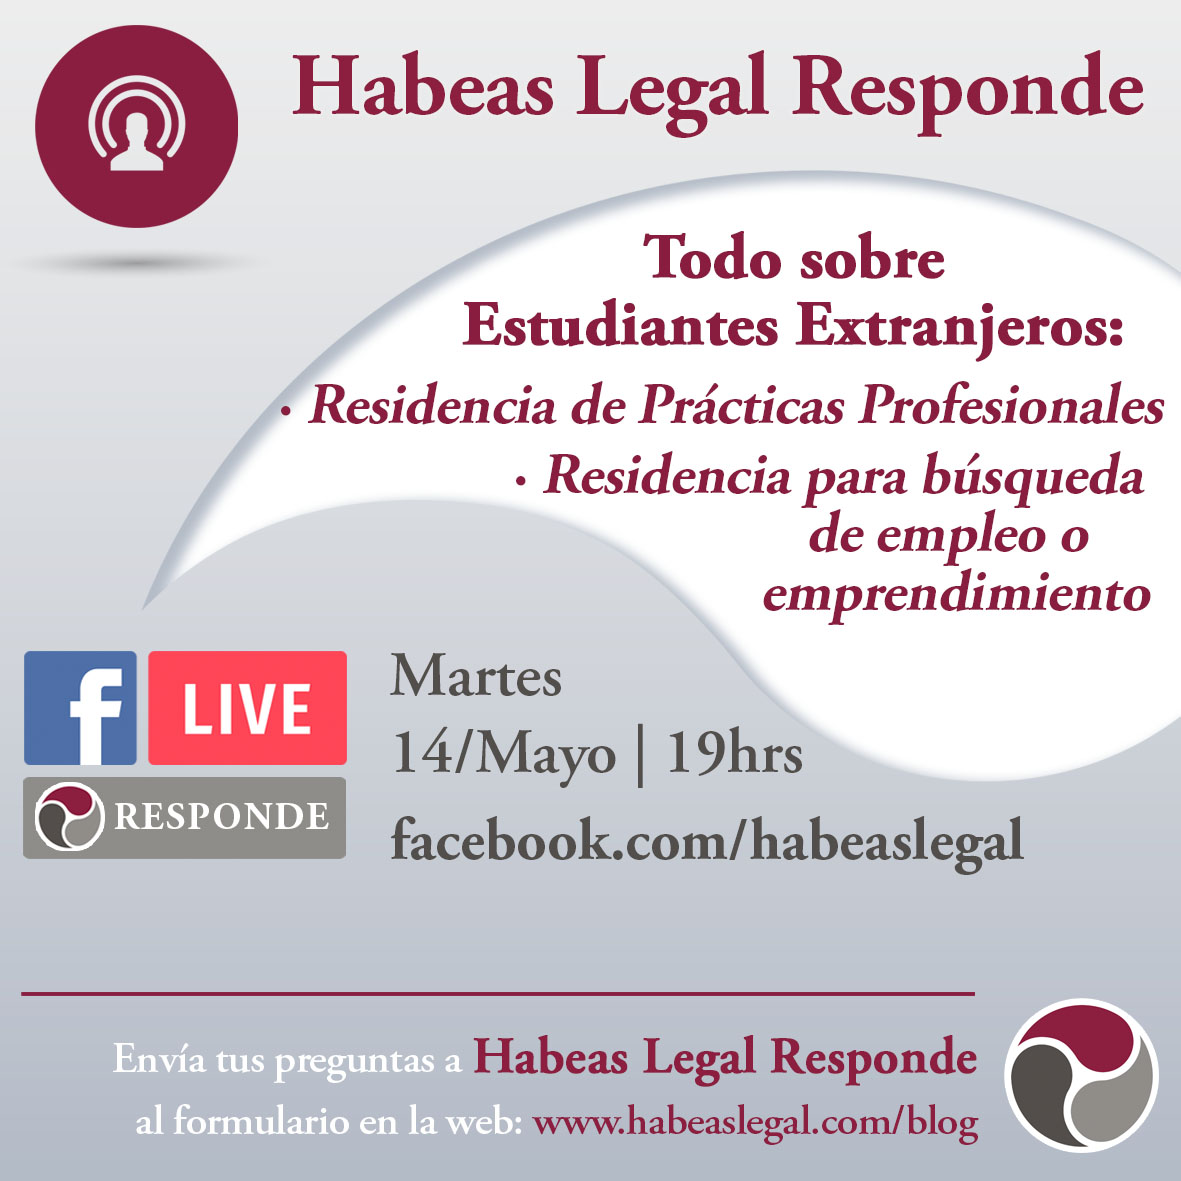 Habeas FB Live ad calendar residencia 14 Mayo Habeas te responde